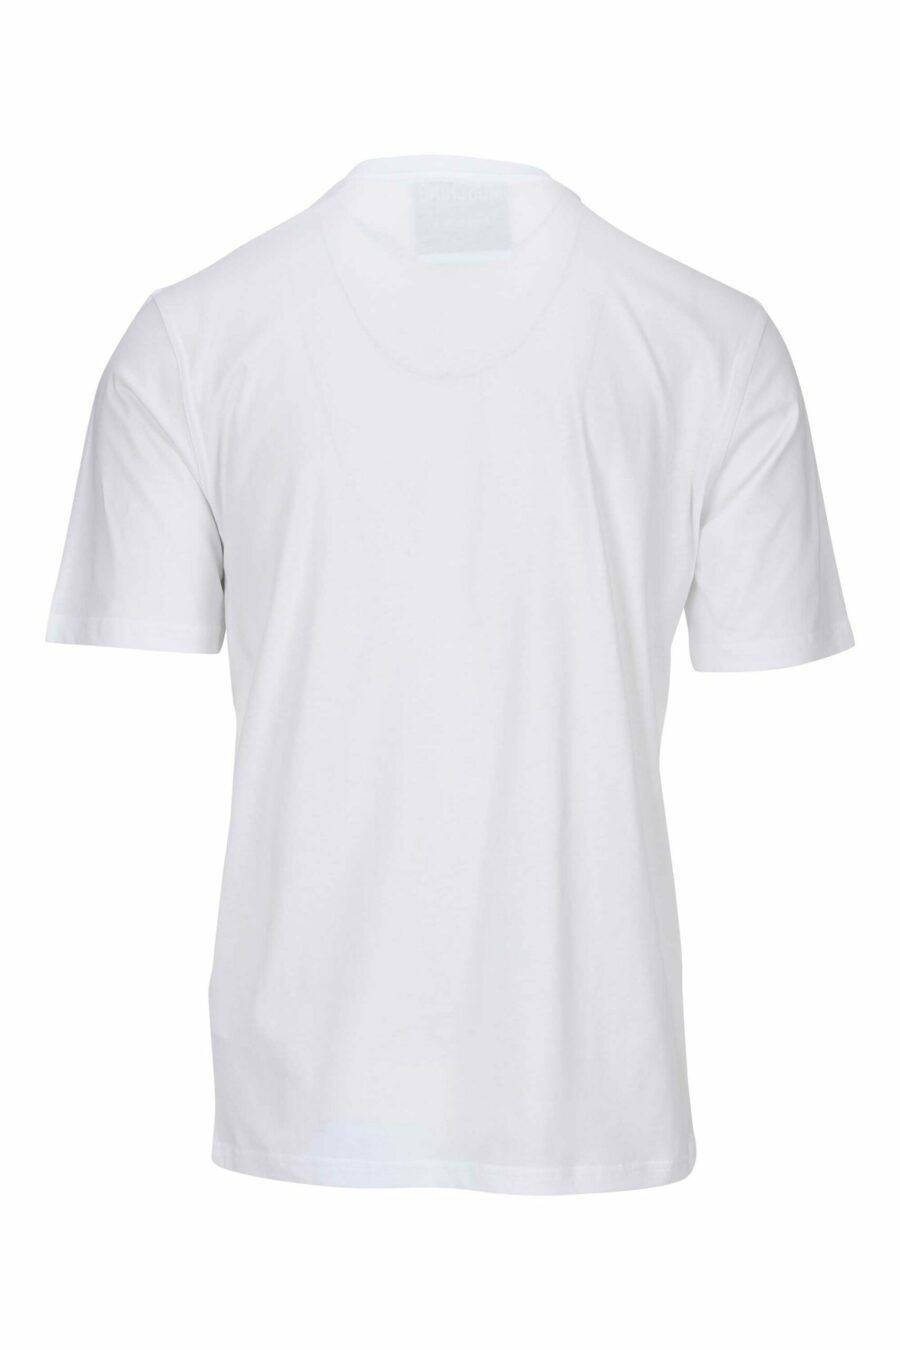 Camiseta blanca de algodón orgánico "100% pure moschino" - 667113764948 1 scaled